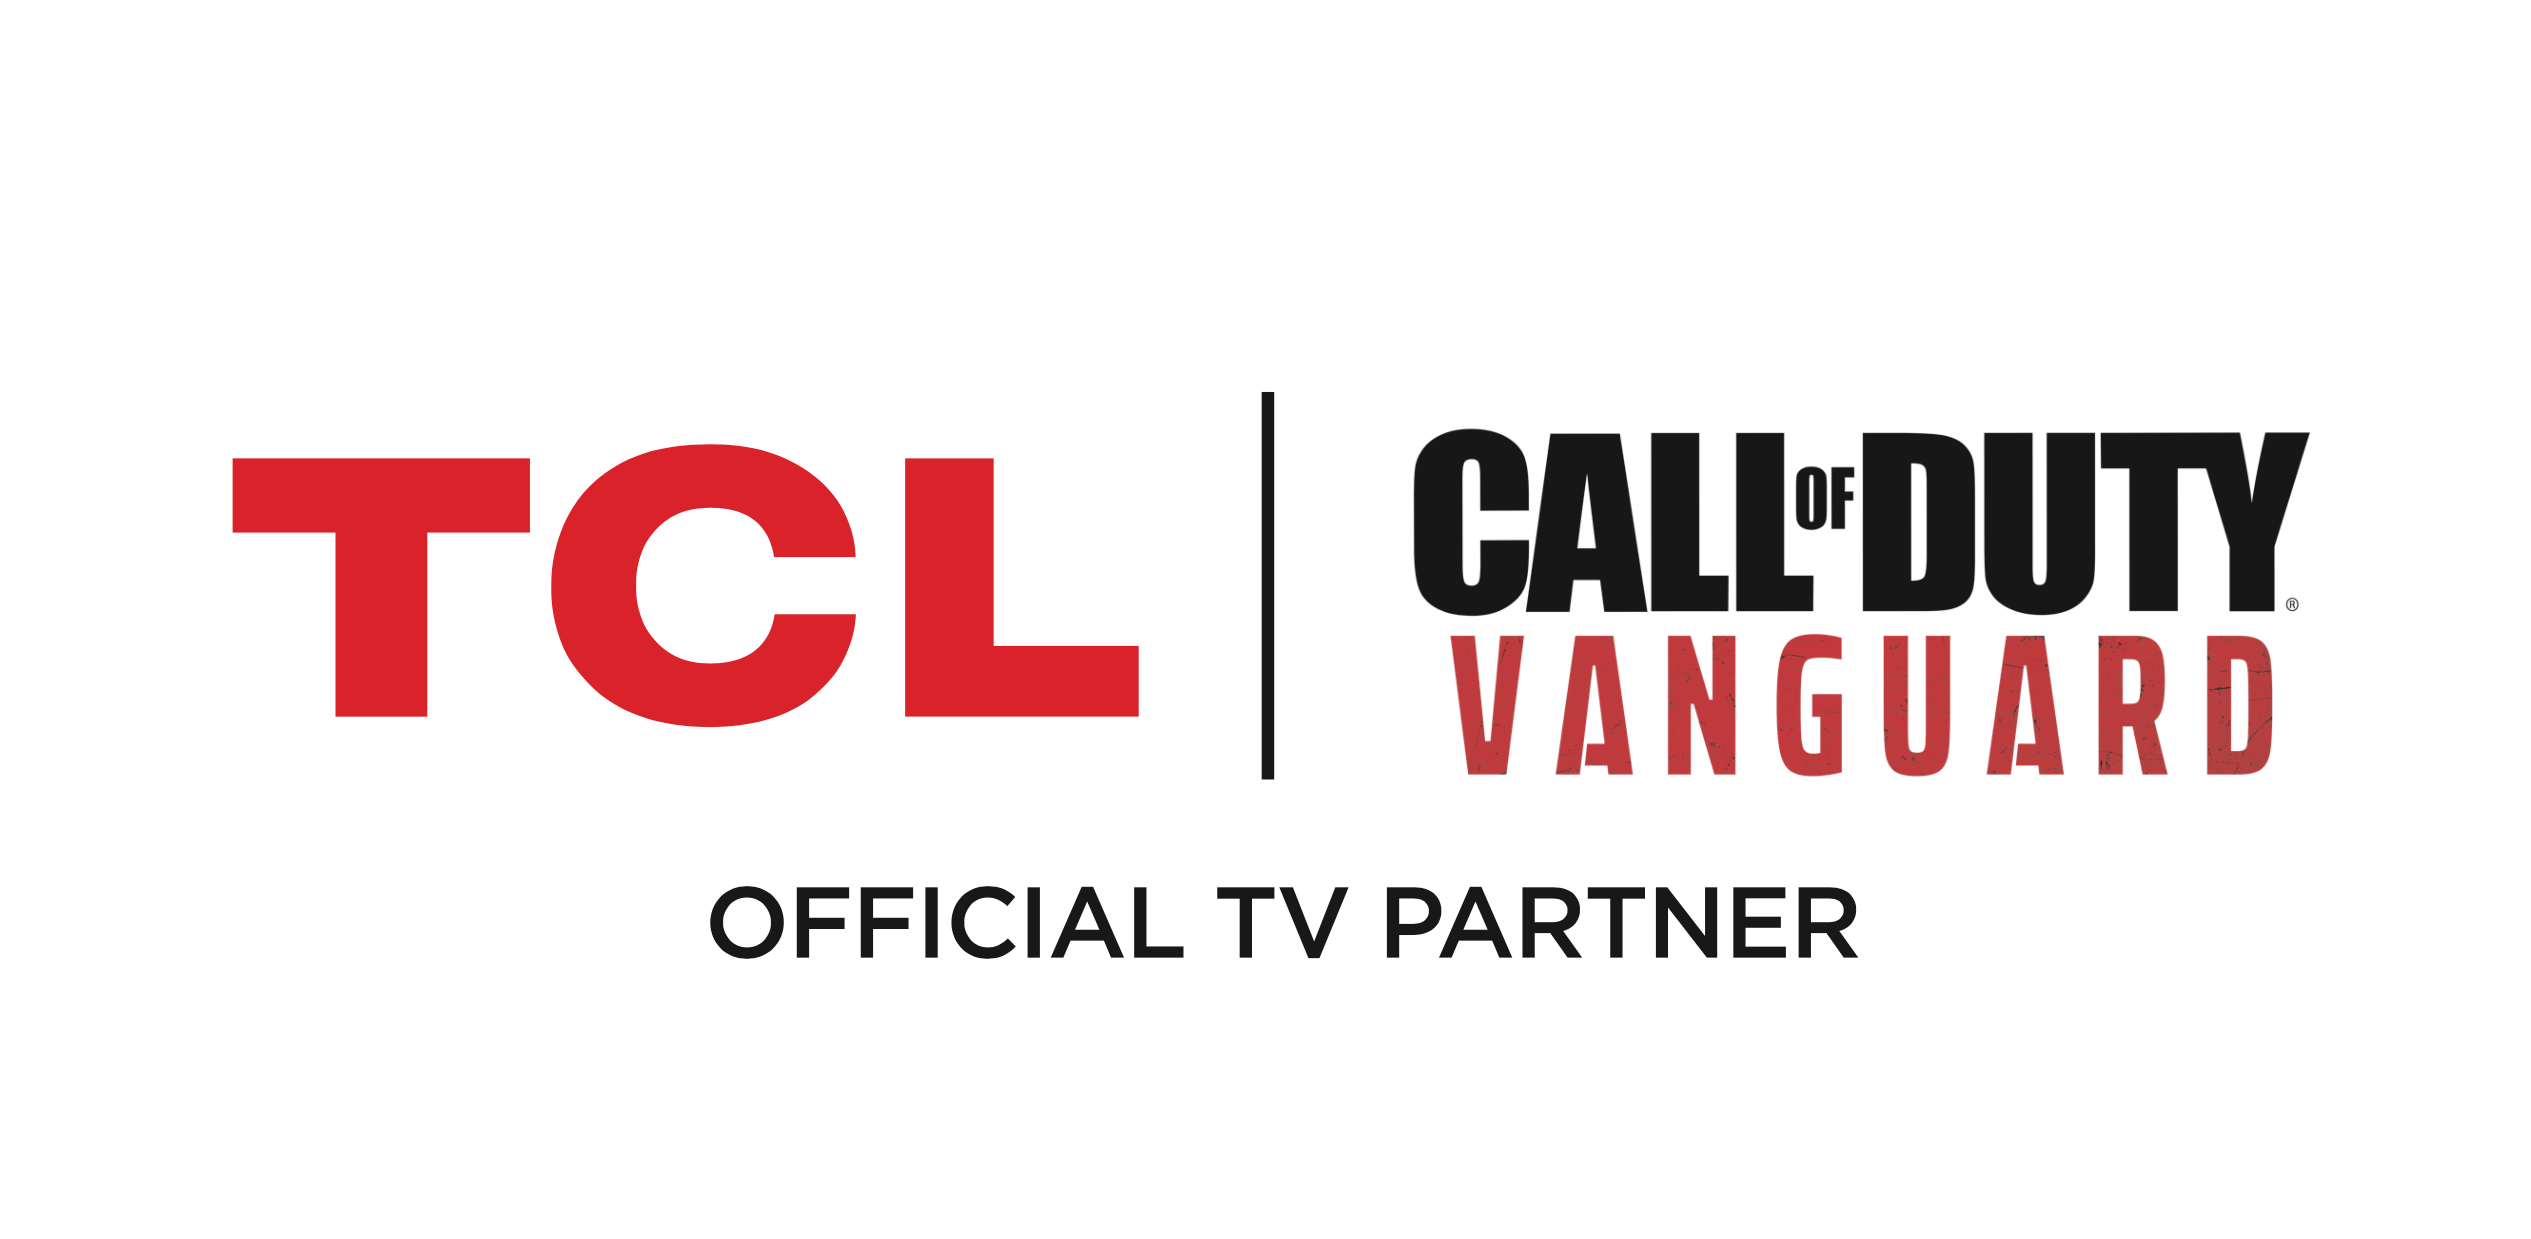 TCL Call of Duty Vanguard